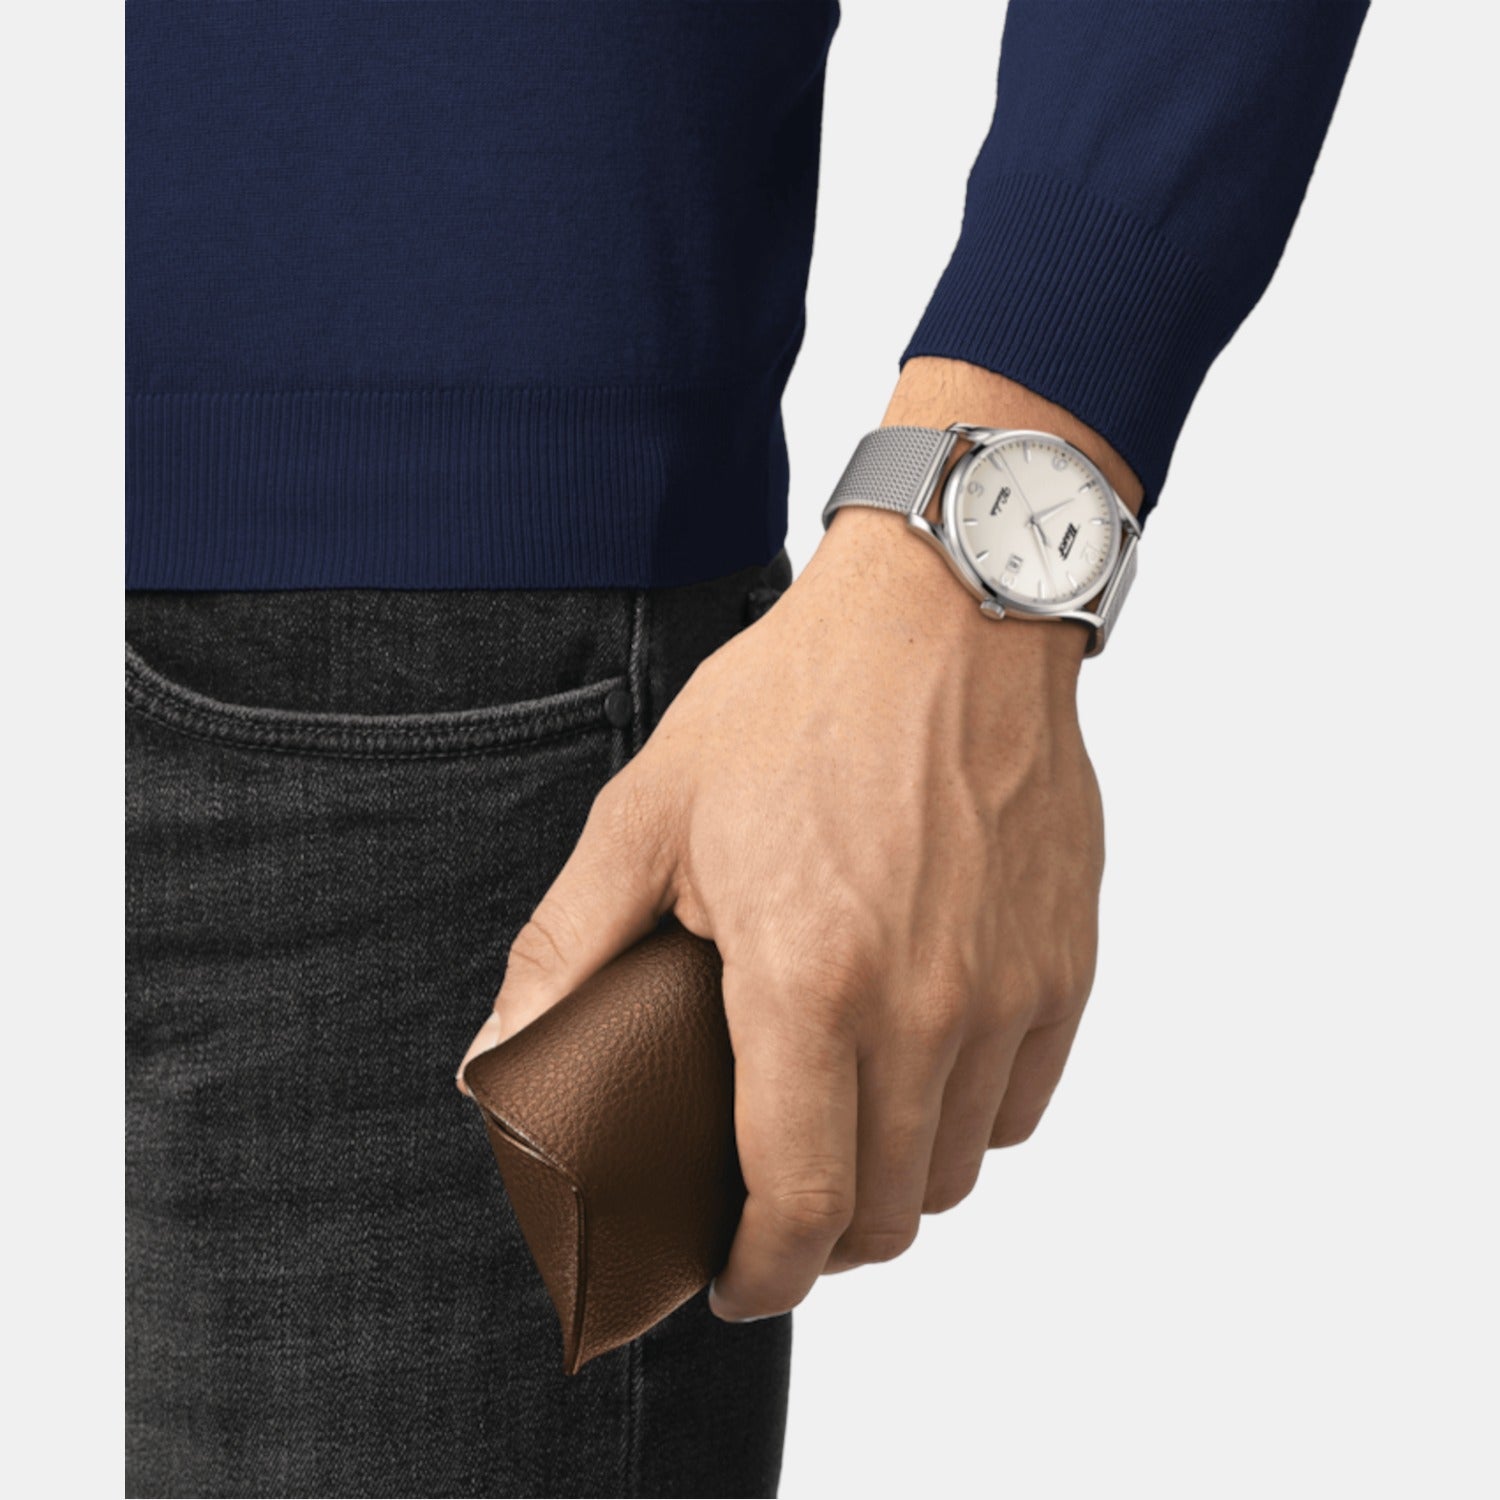 tissot-stainless-steel-white-analog-unisex-watch-t1184101127700